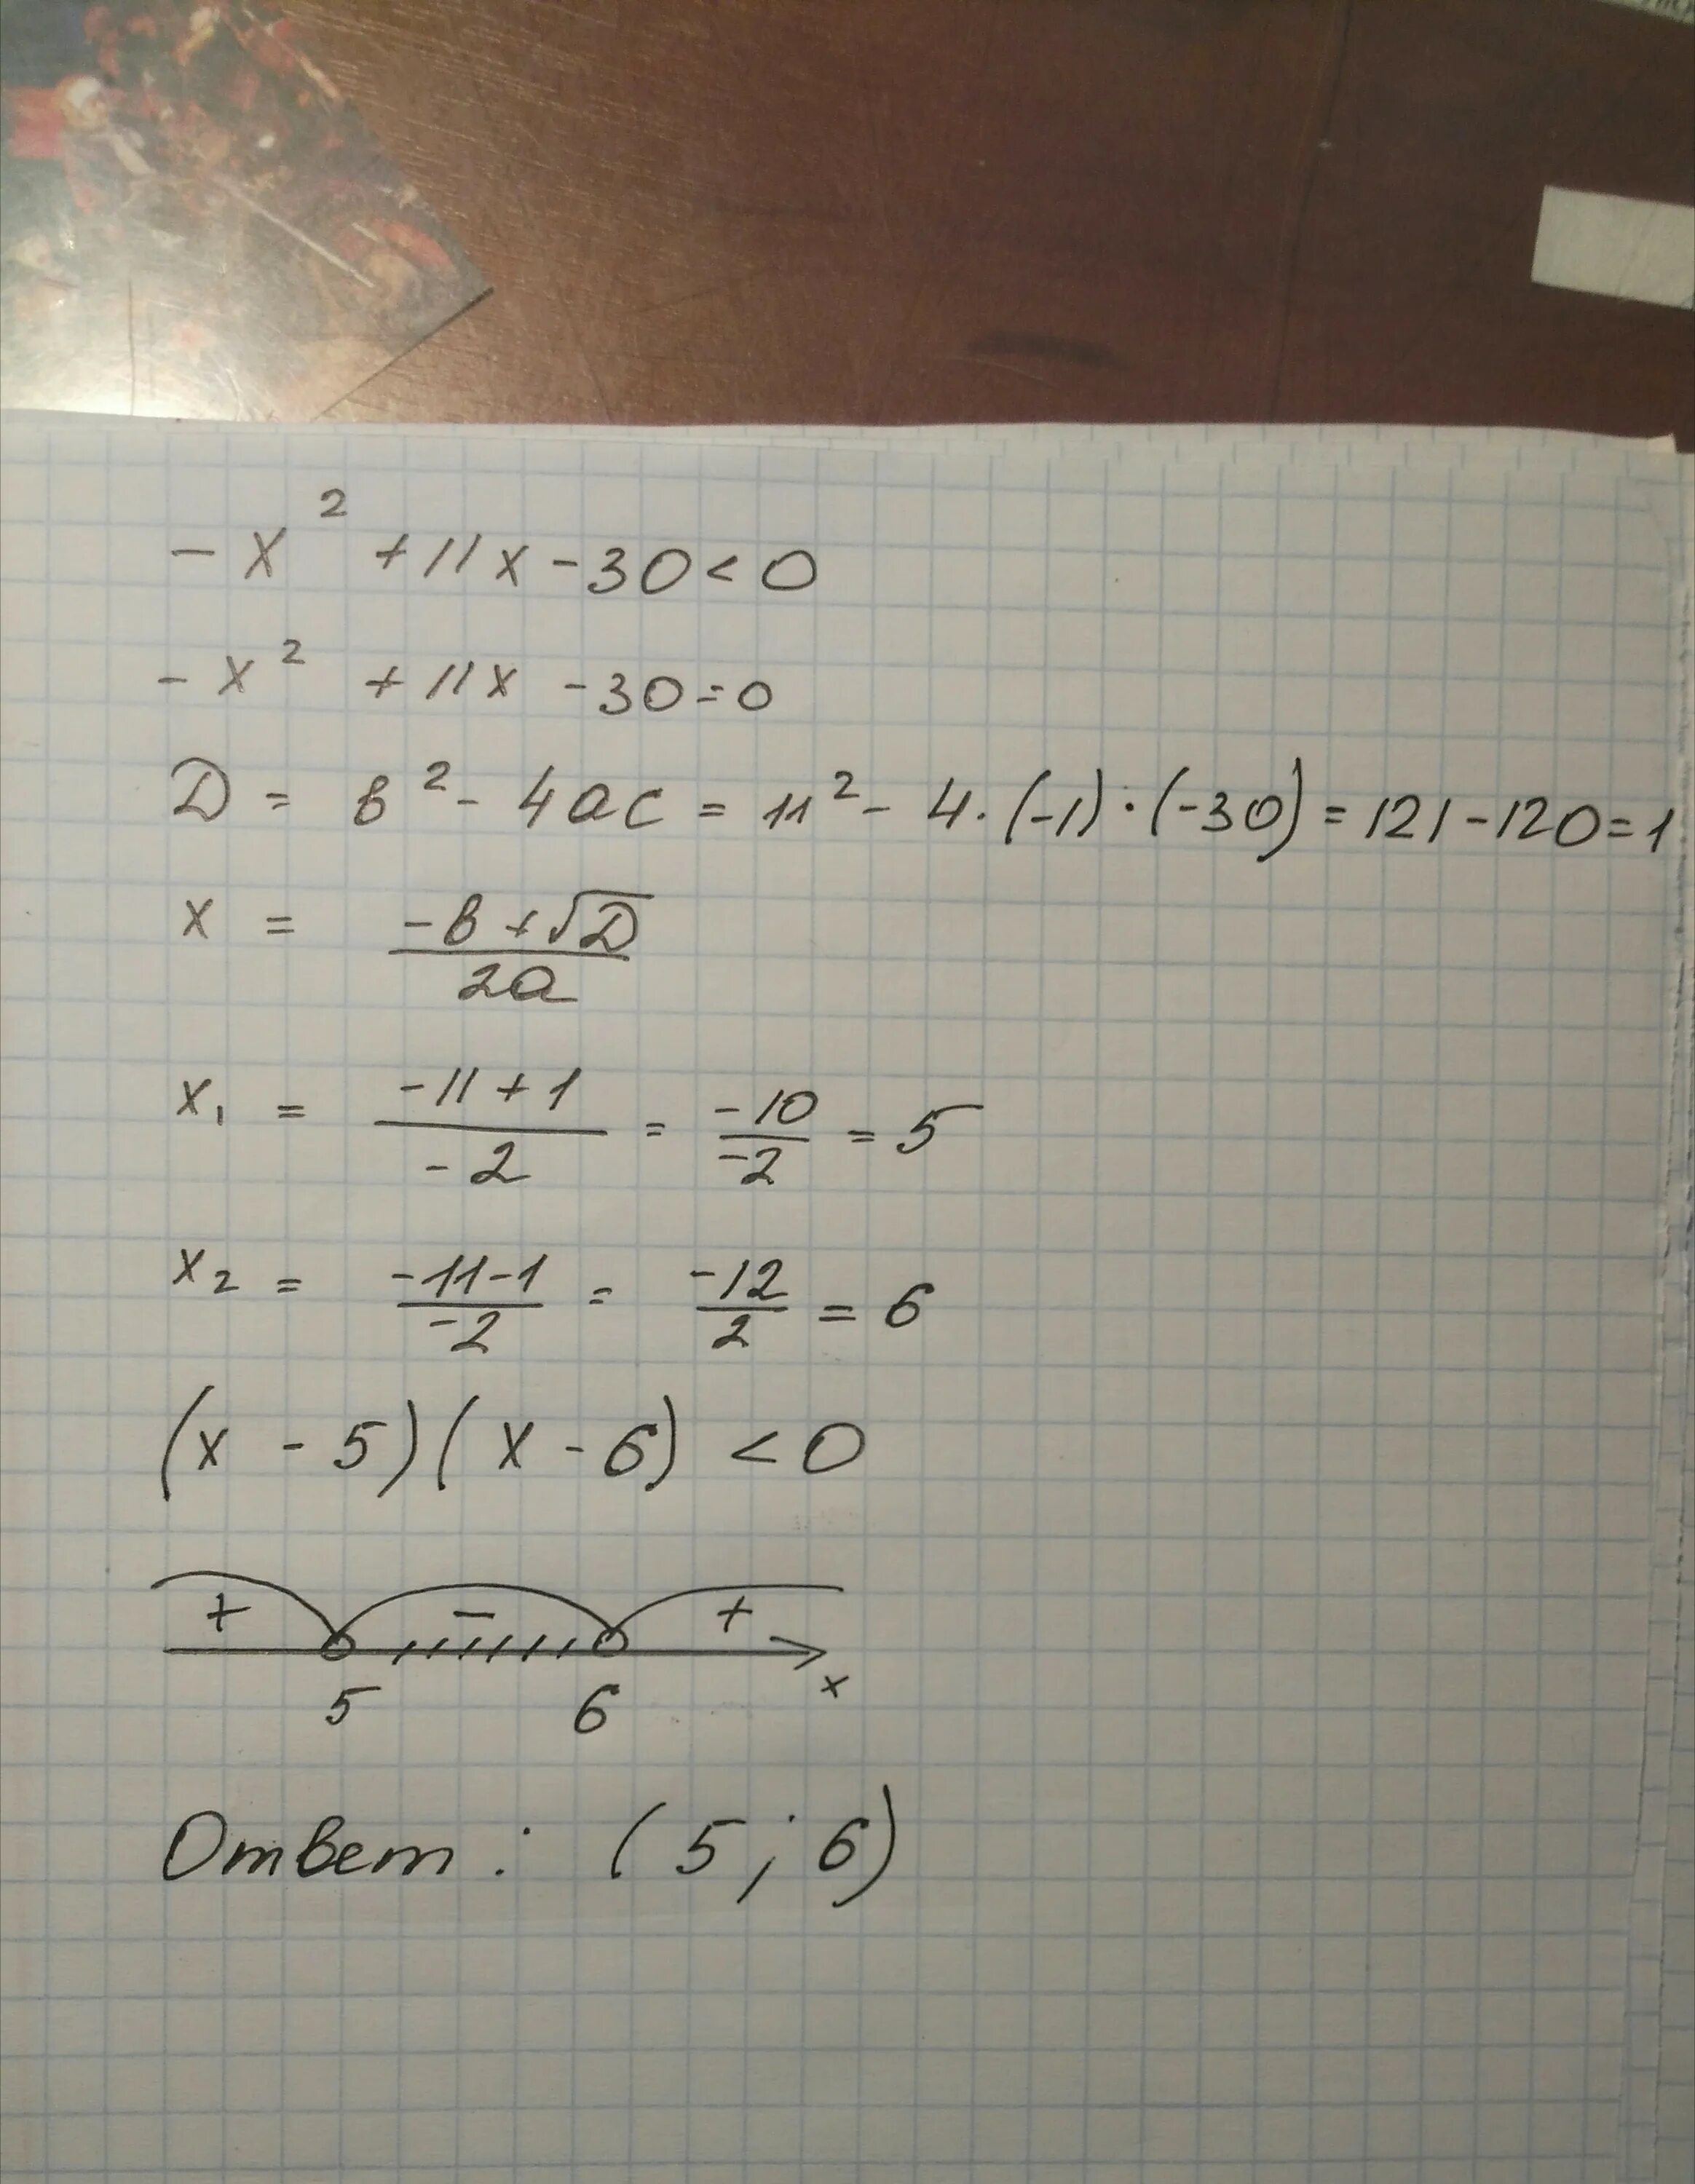 Решите неравенство x2-7x-30>0. X2-11x+30=0 решение. Х²-7х-30>0. X2-11x+30 0. X2 5x 13 0